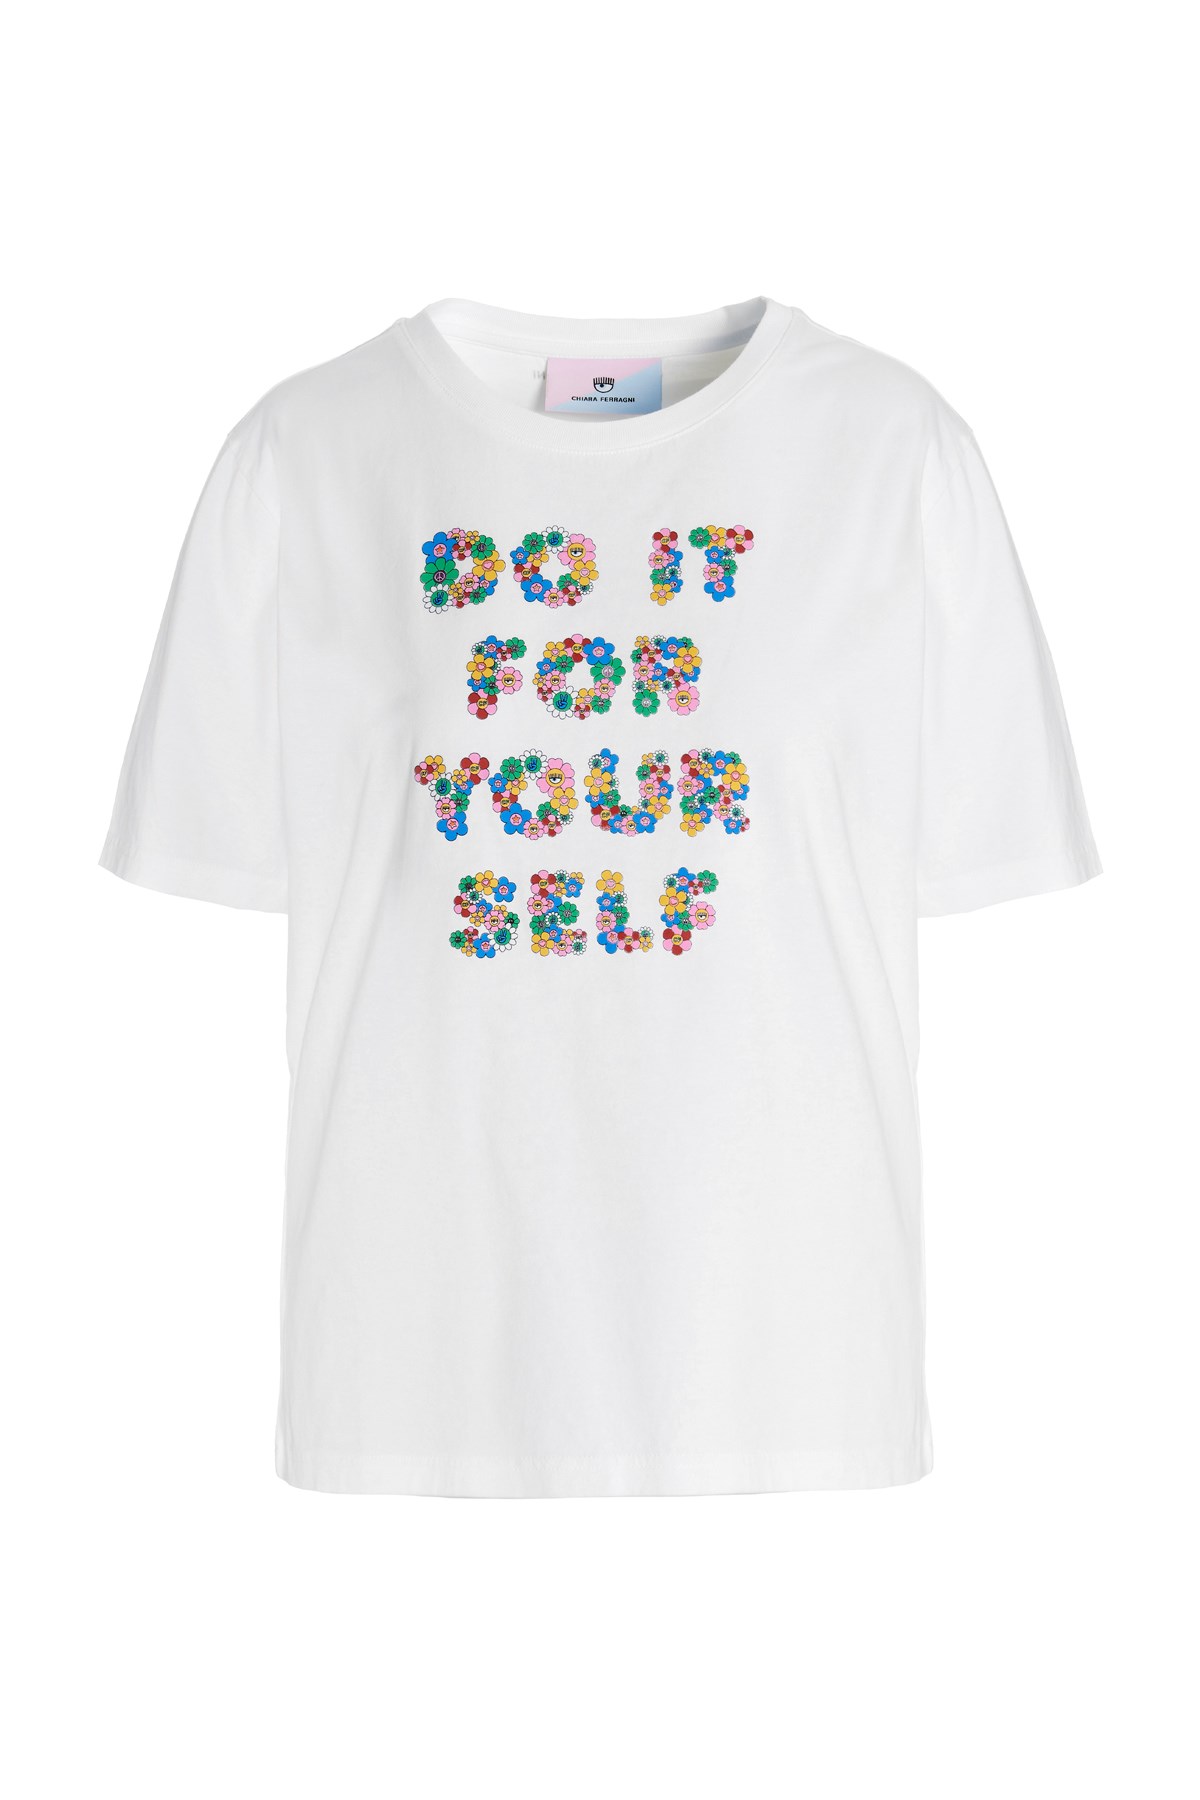 CHIARA FERRAGNI BRAND T-Shirt 'Your Self'